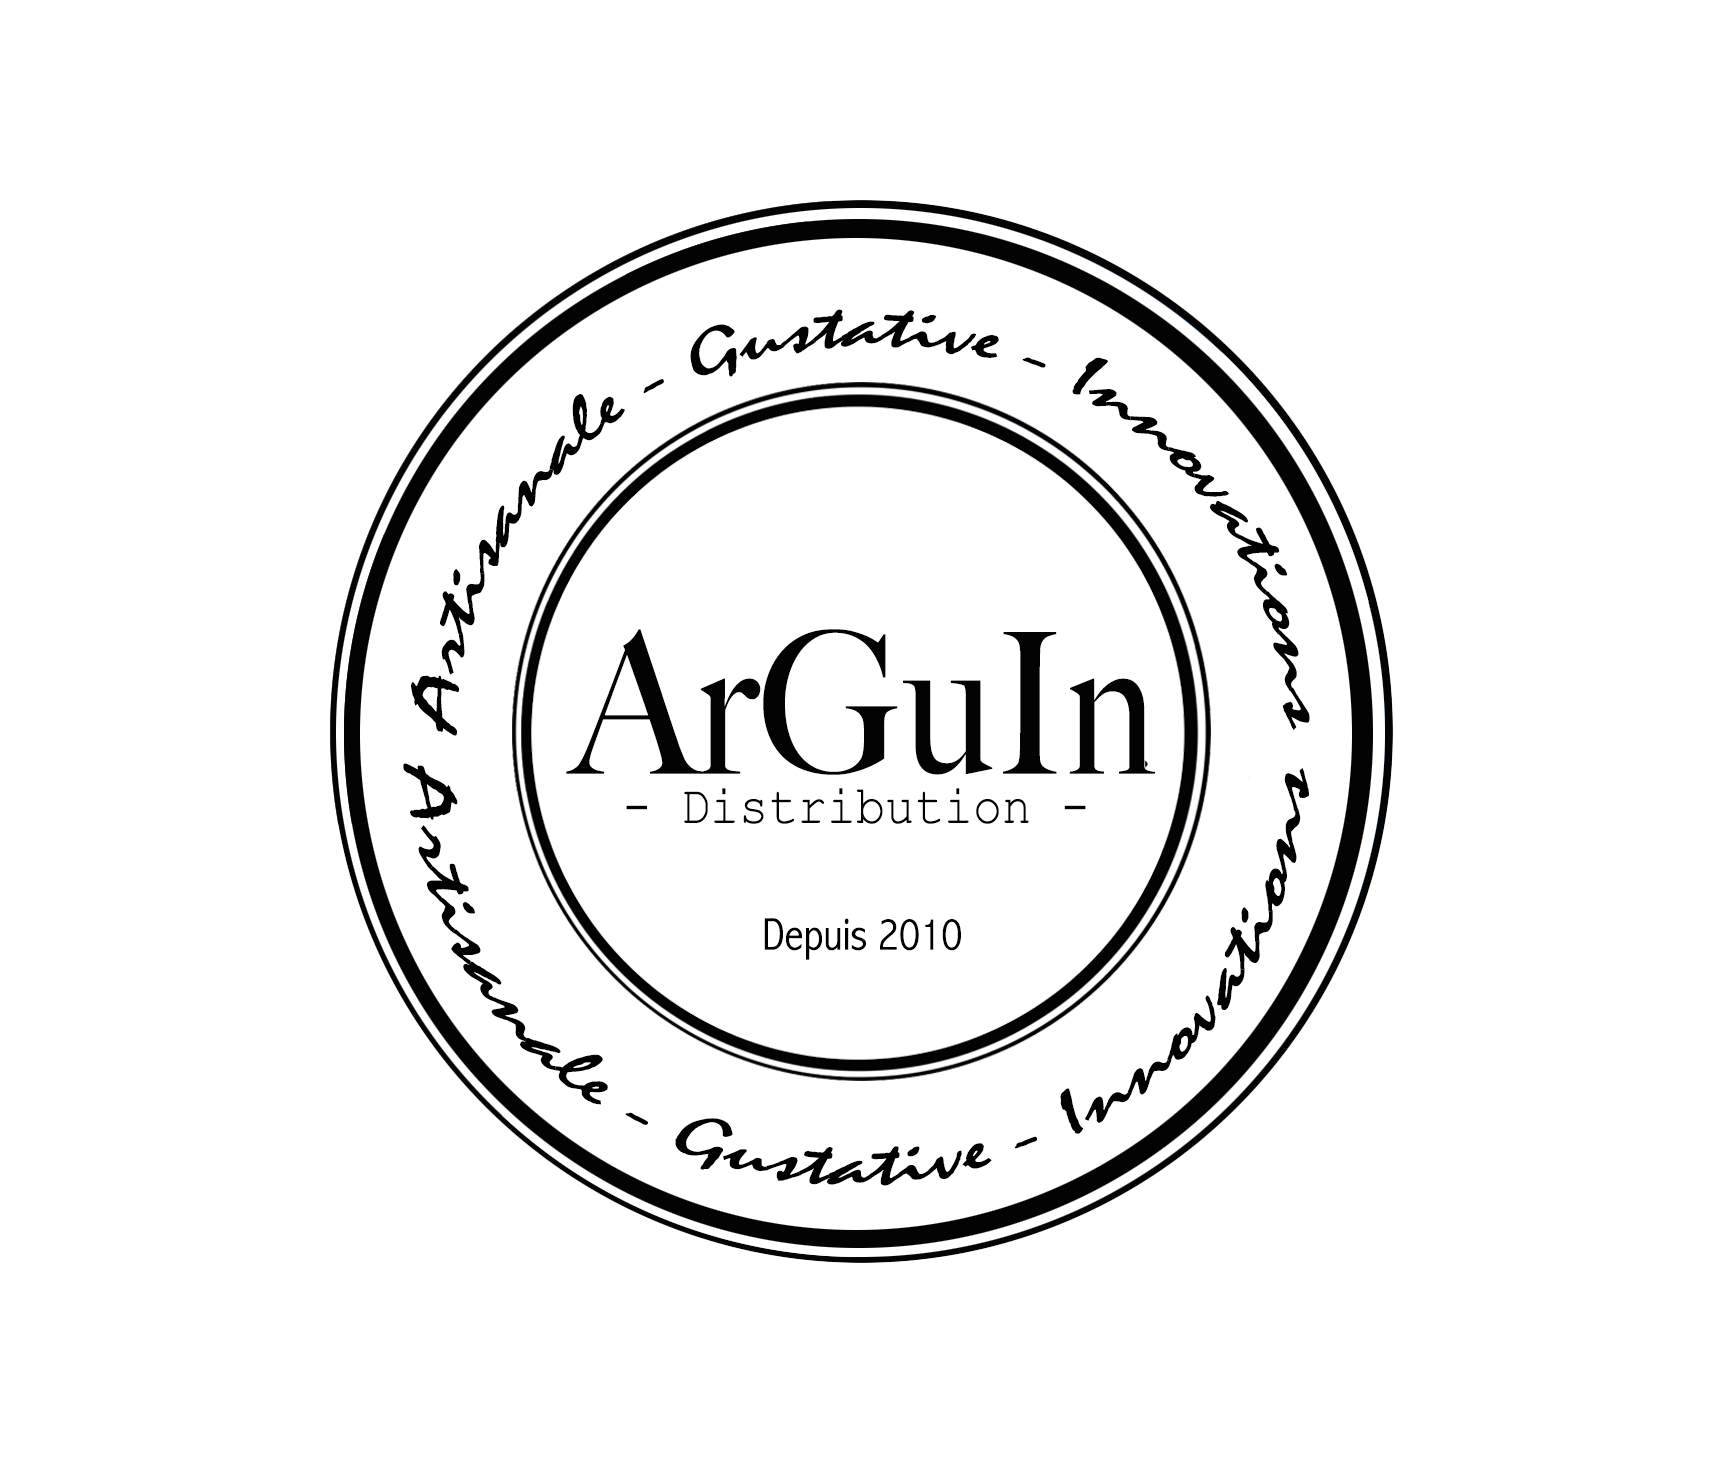 ArGuIn Distribution